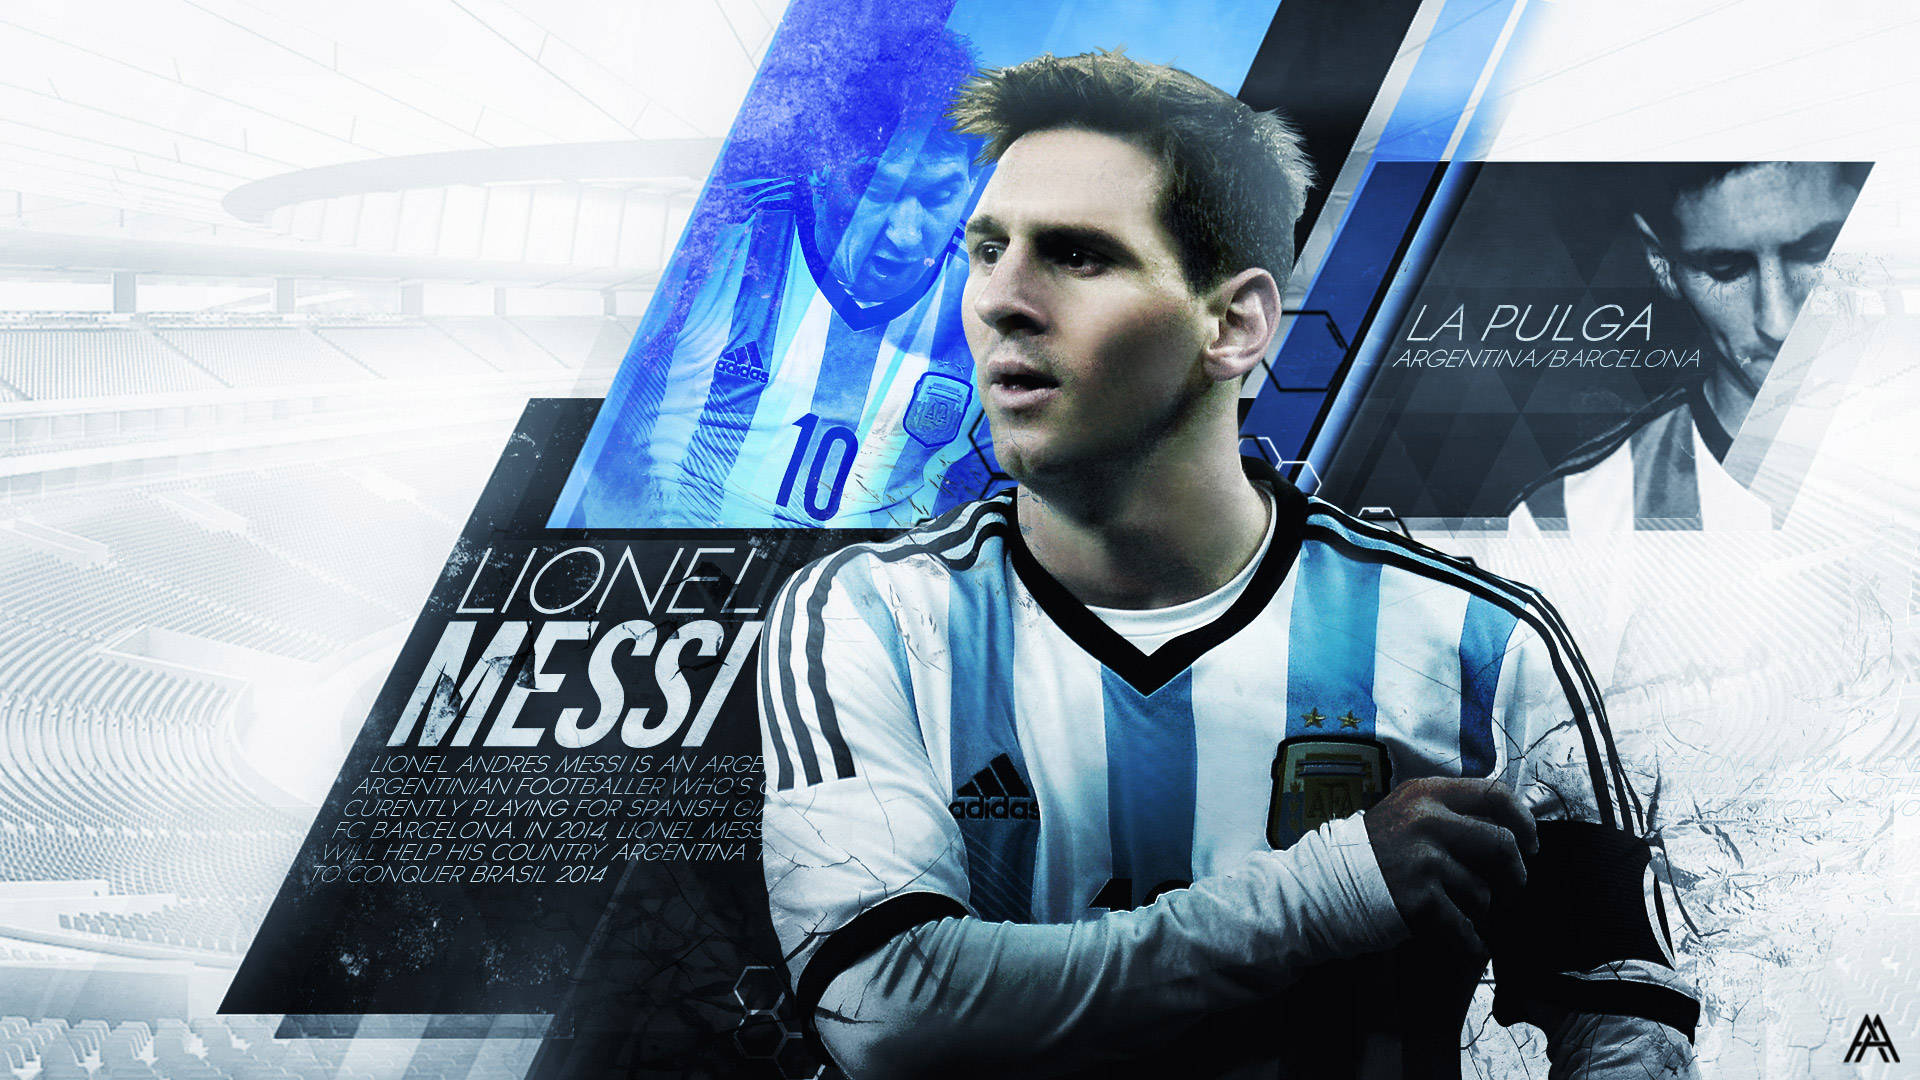 Messi Desktop Background Wallpapers Backgrounds Images Art Photos